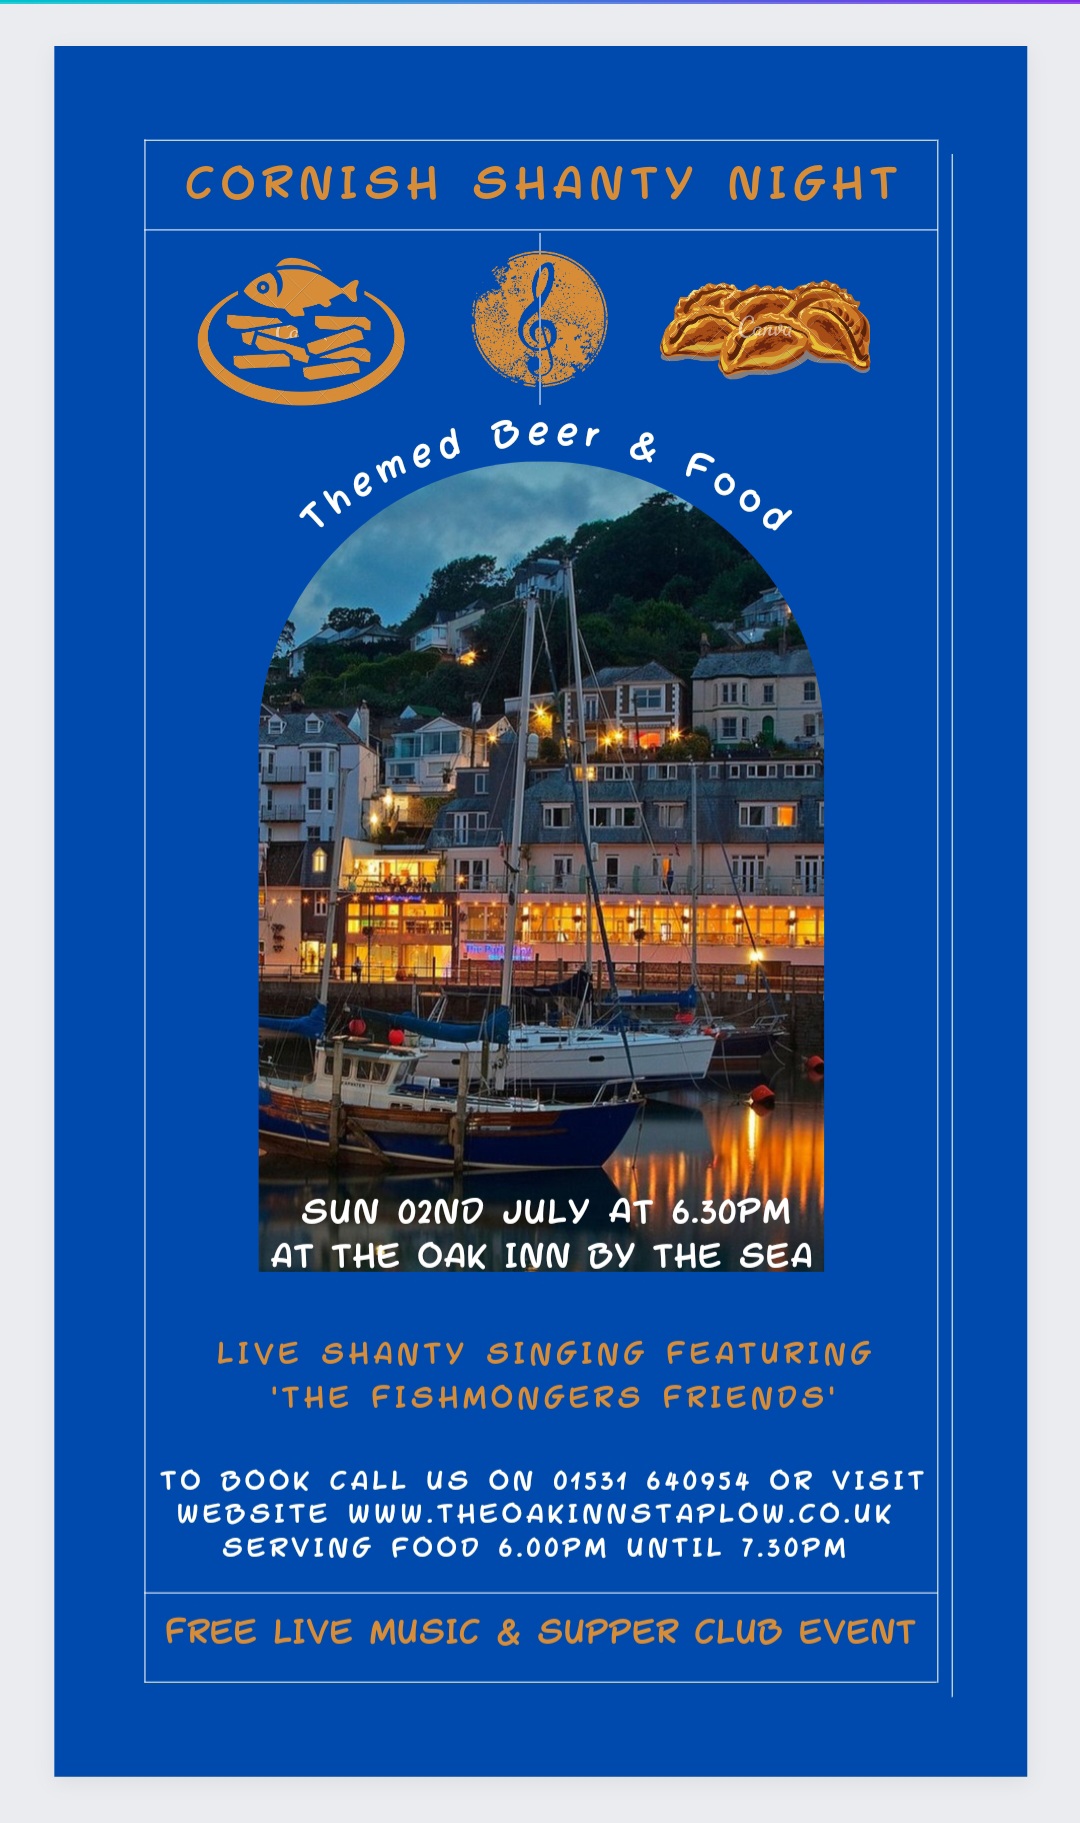 Sea Shanty Live Music Event at The Oak inn Staplow Ledbury, Herefordshire